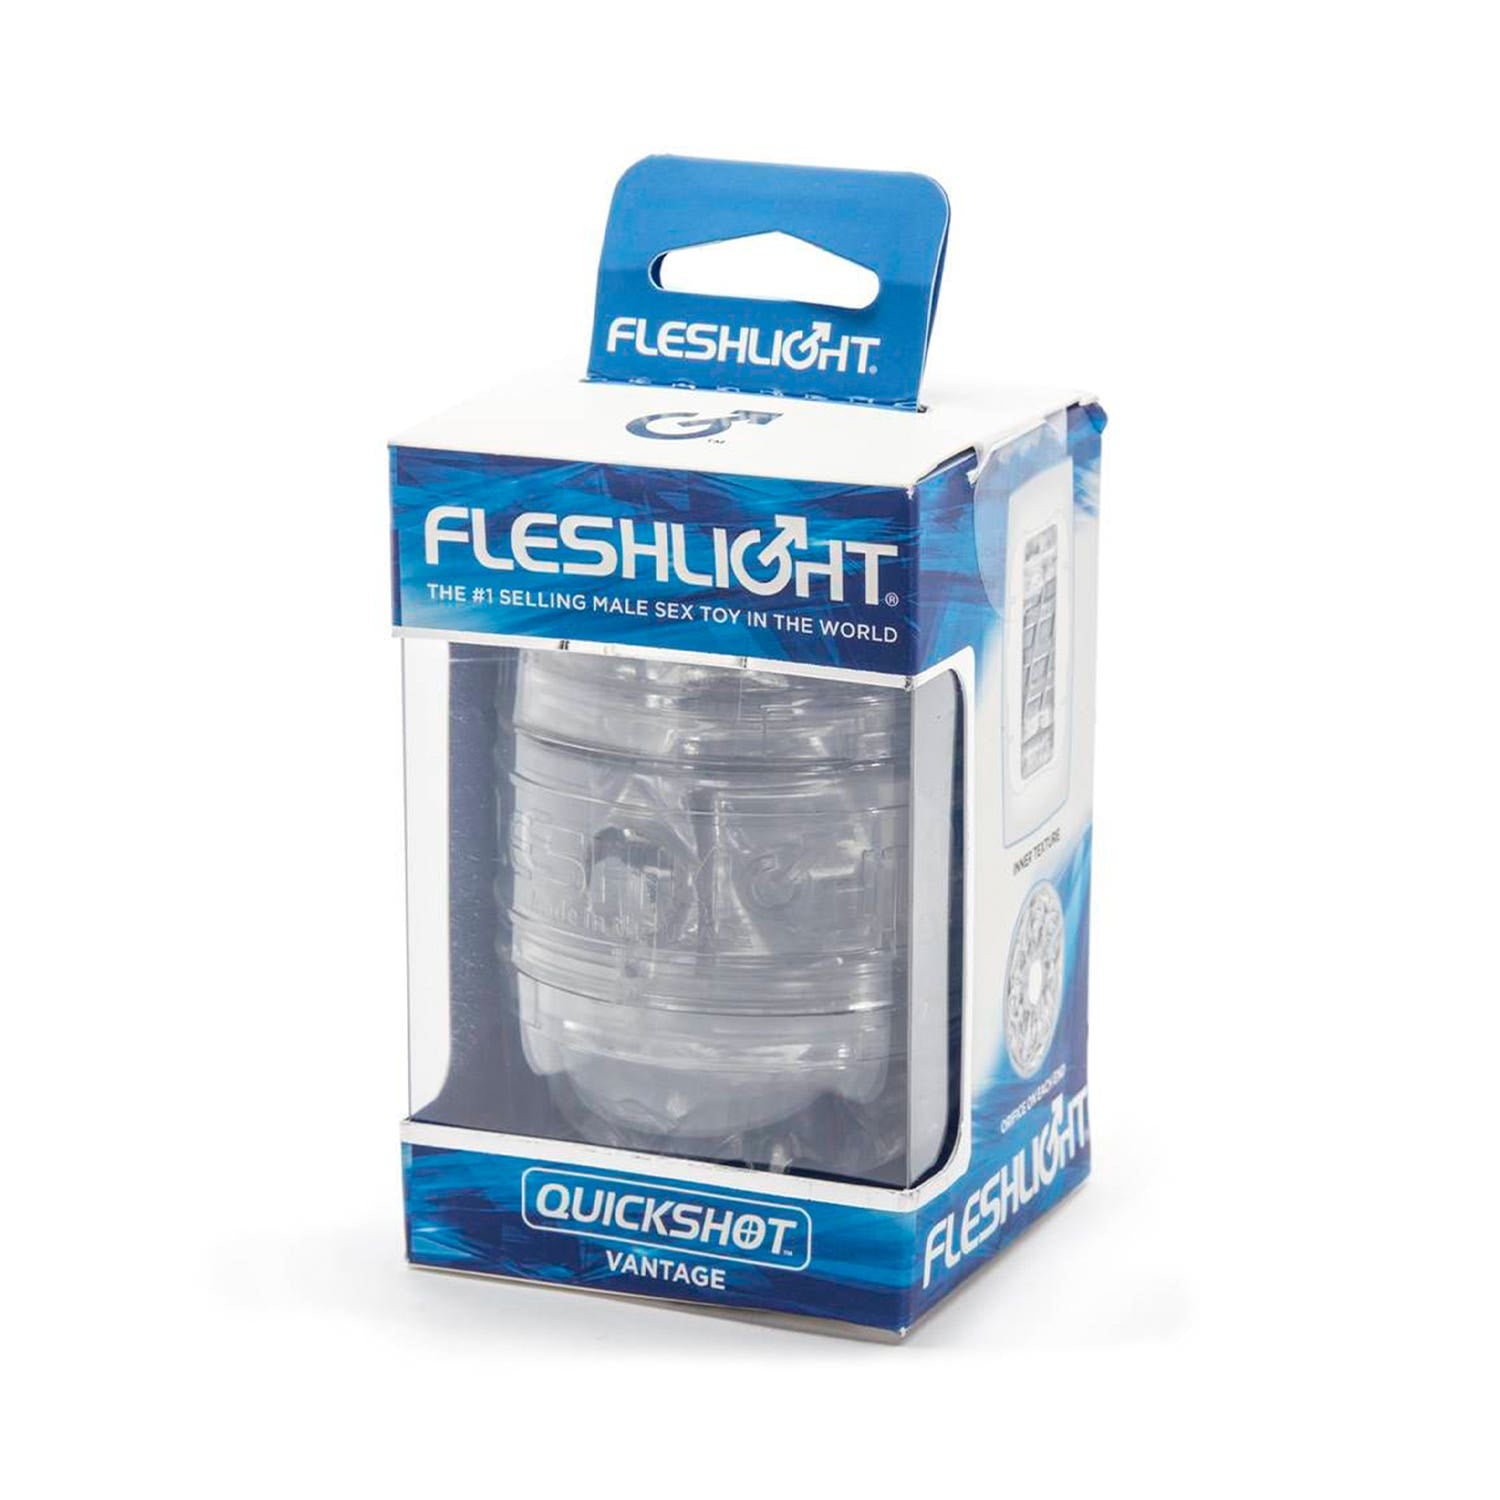 Fleshlight - Quickshot Vantage Compact Male Stroker